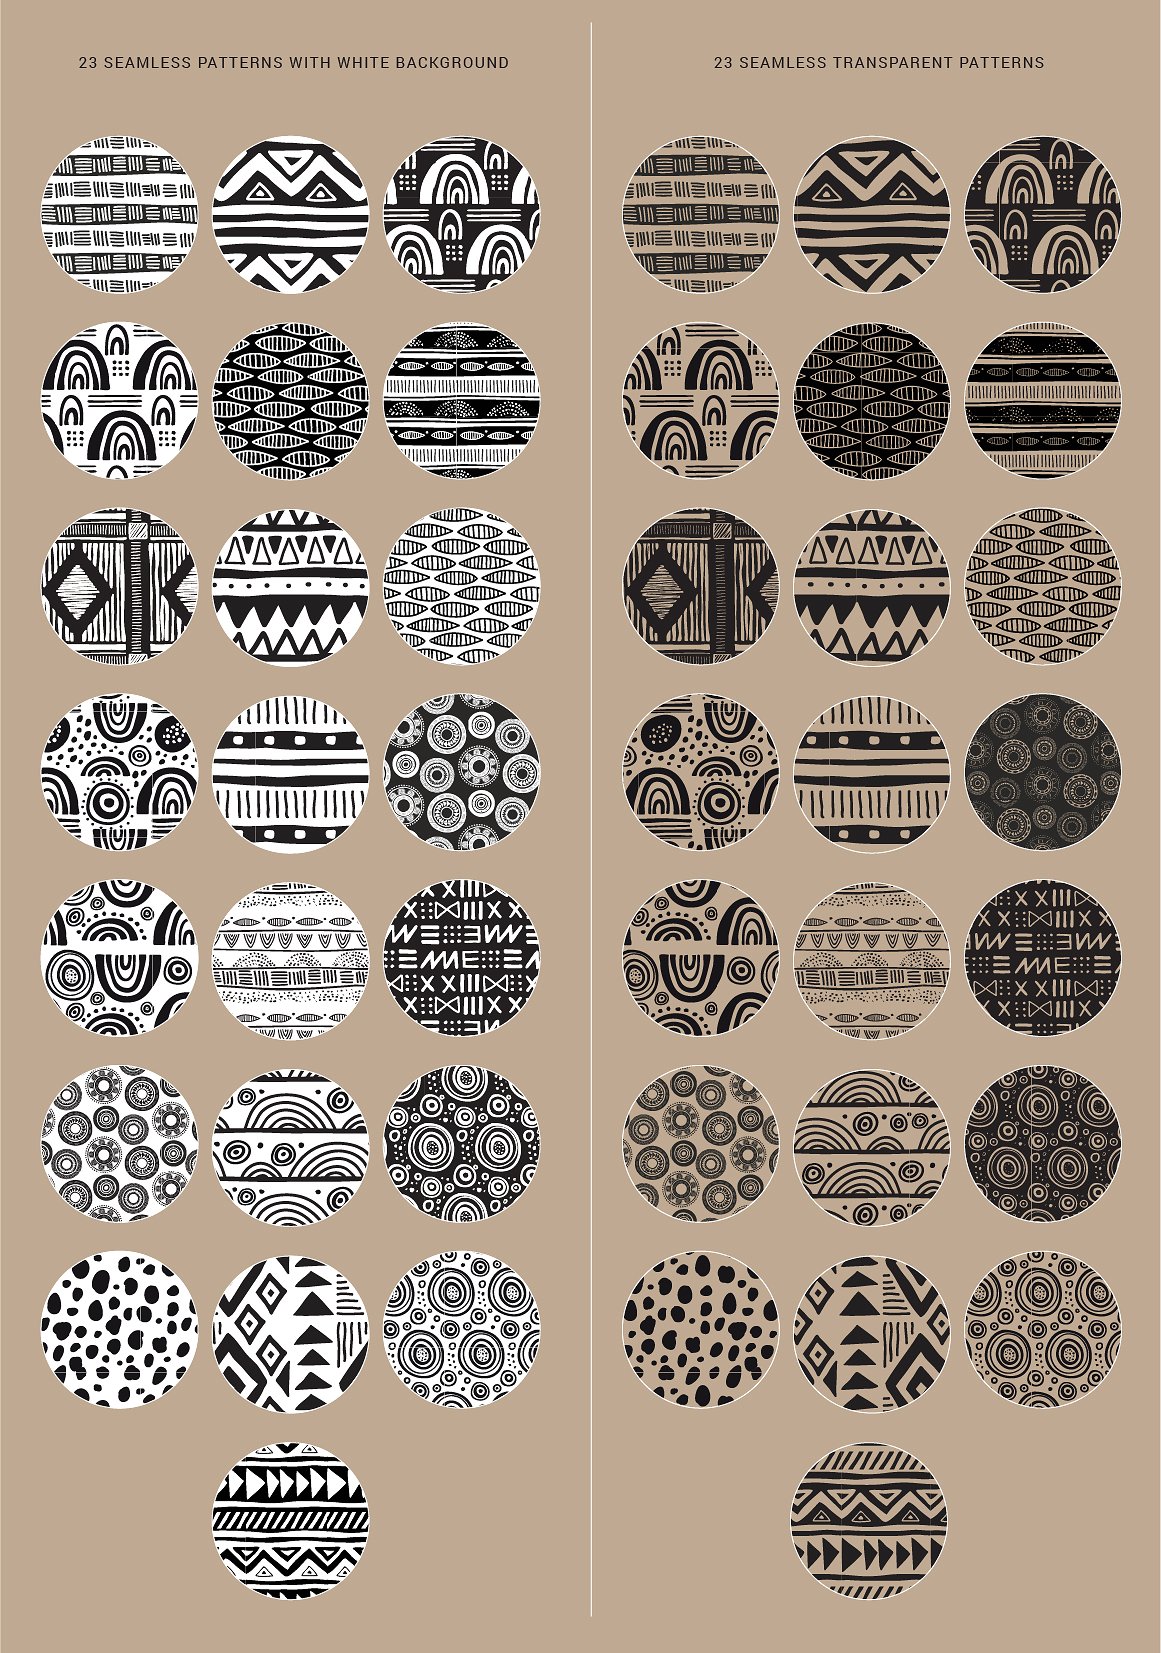 非洲梦系列工艺品设计素材包 African dream – patterns and brushes插图(5)